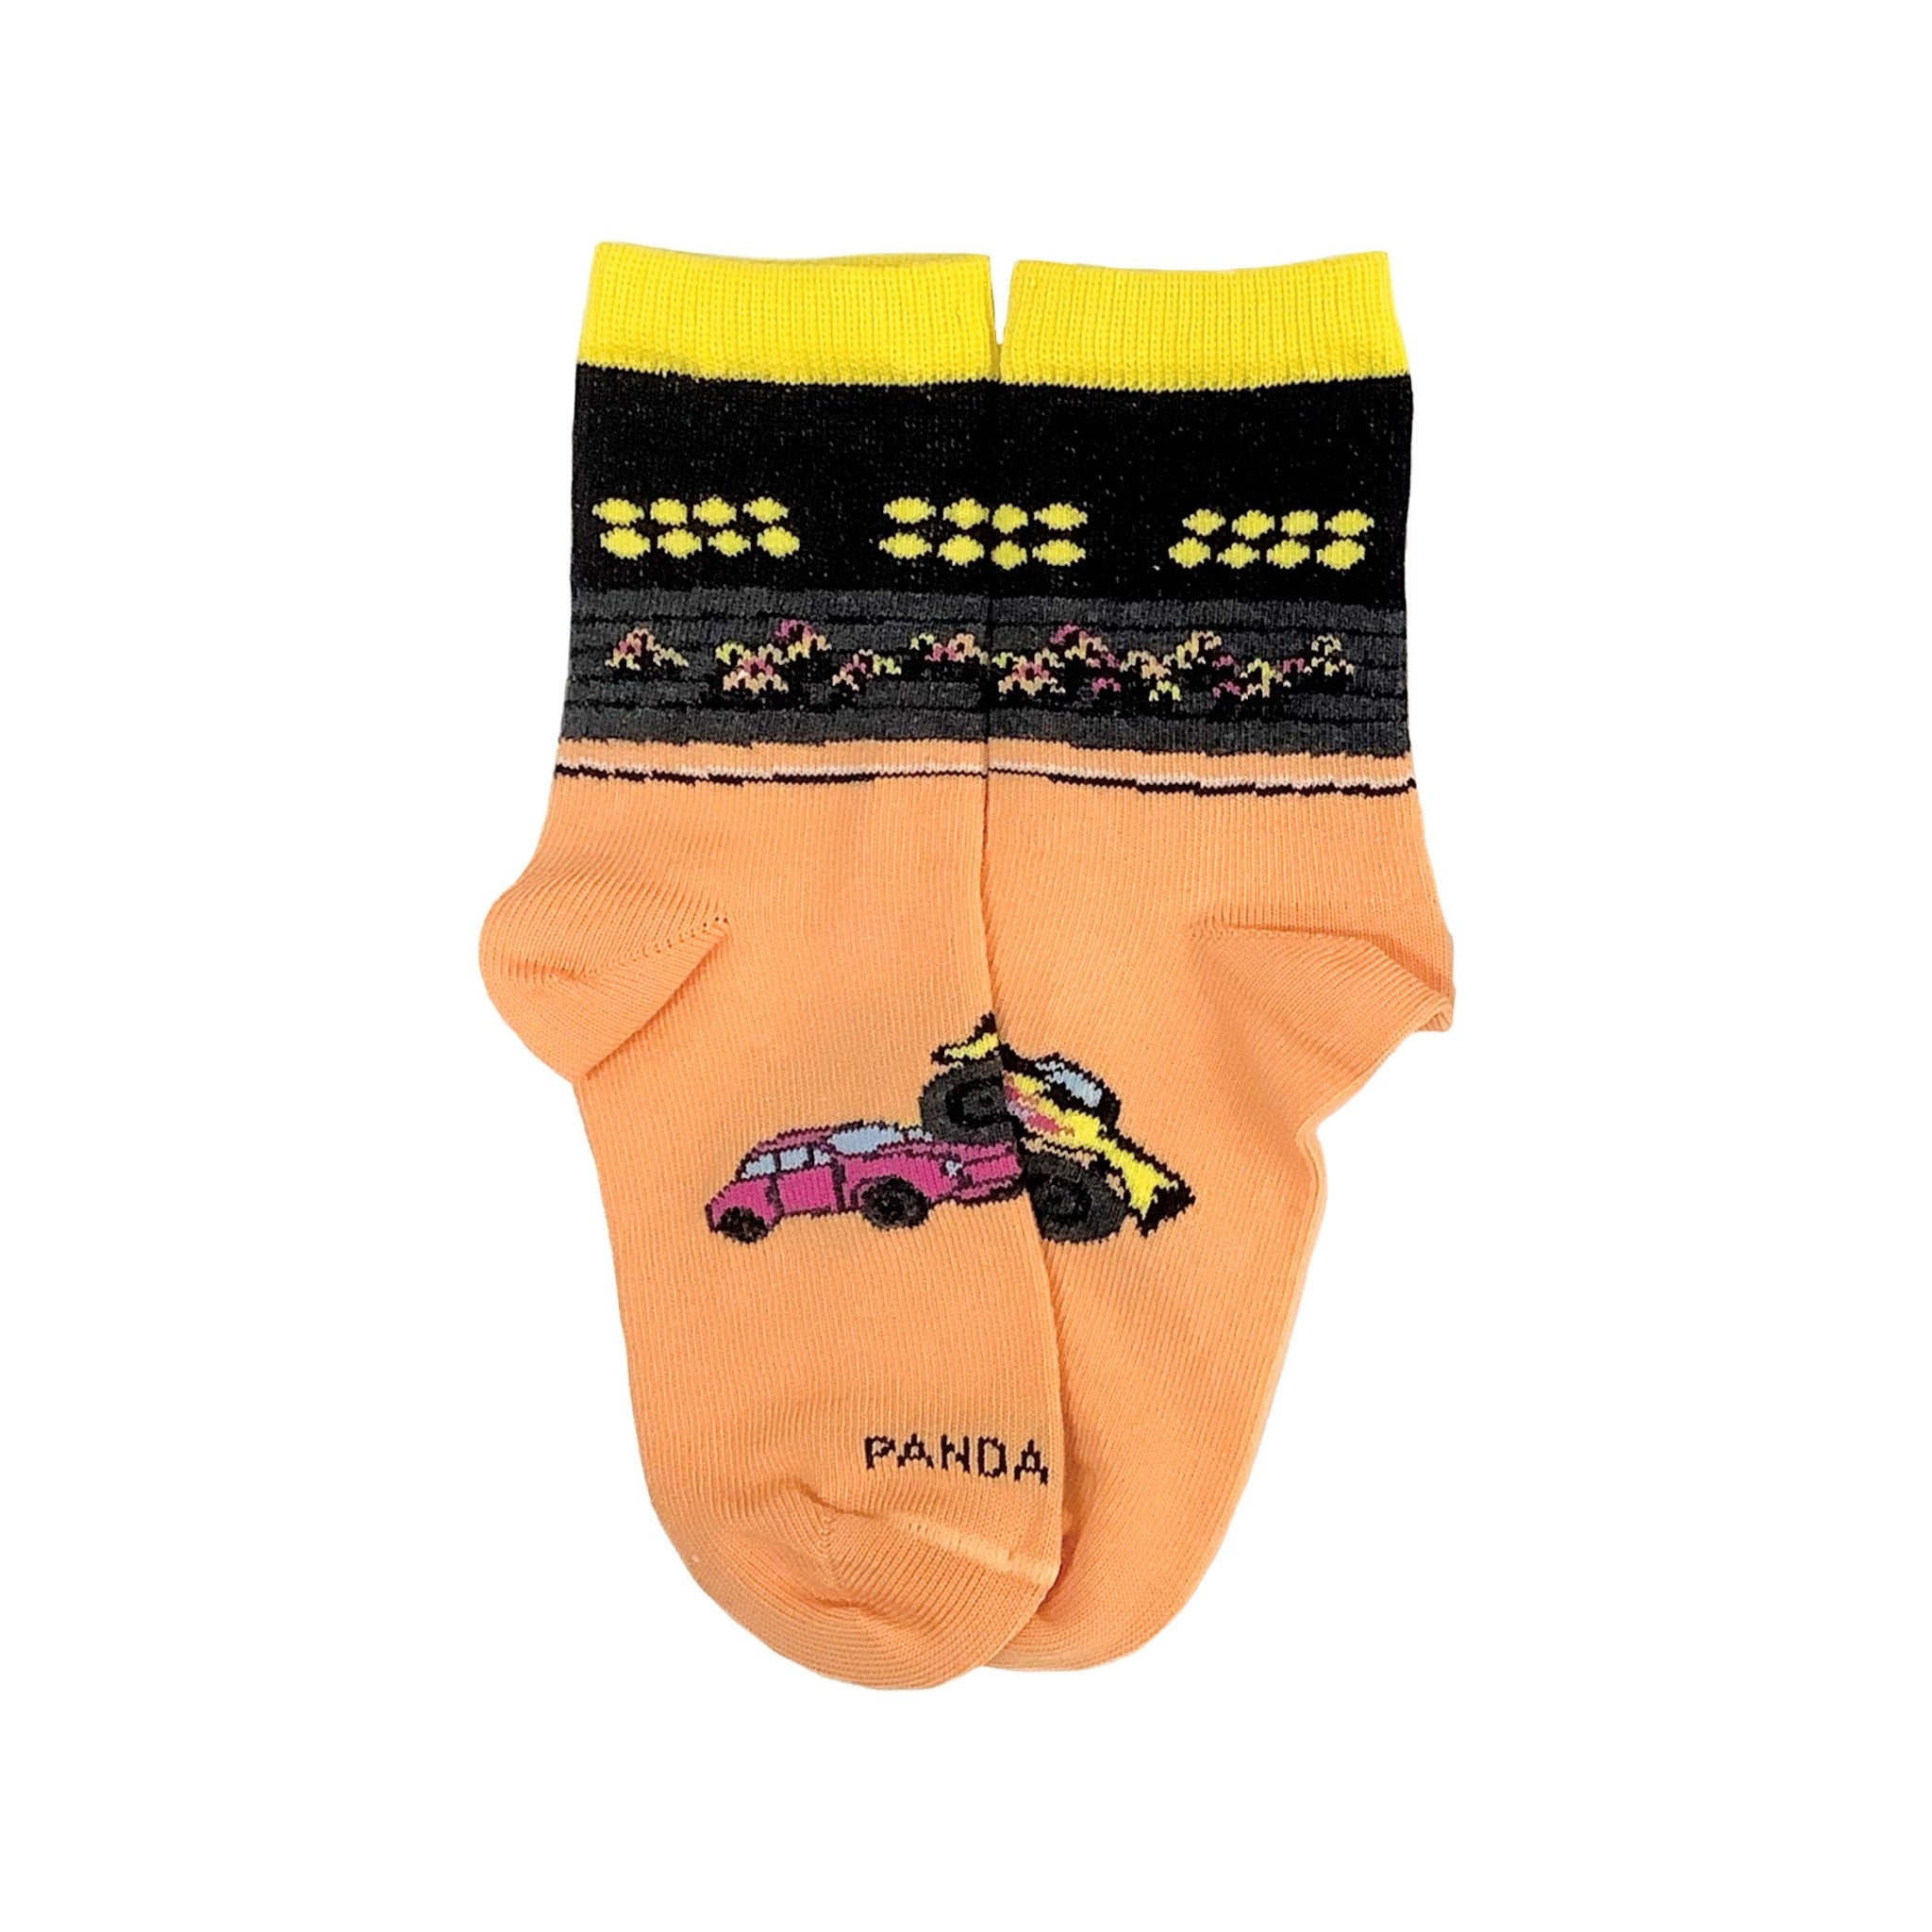 Monster Truck Racing Socks (Ages 3-7) from Sock Panda